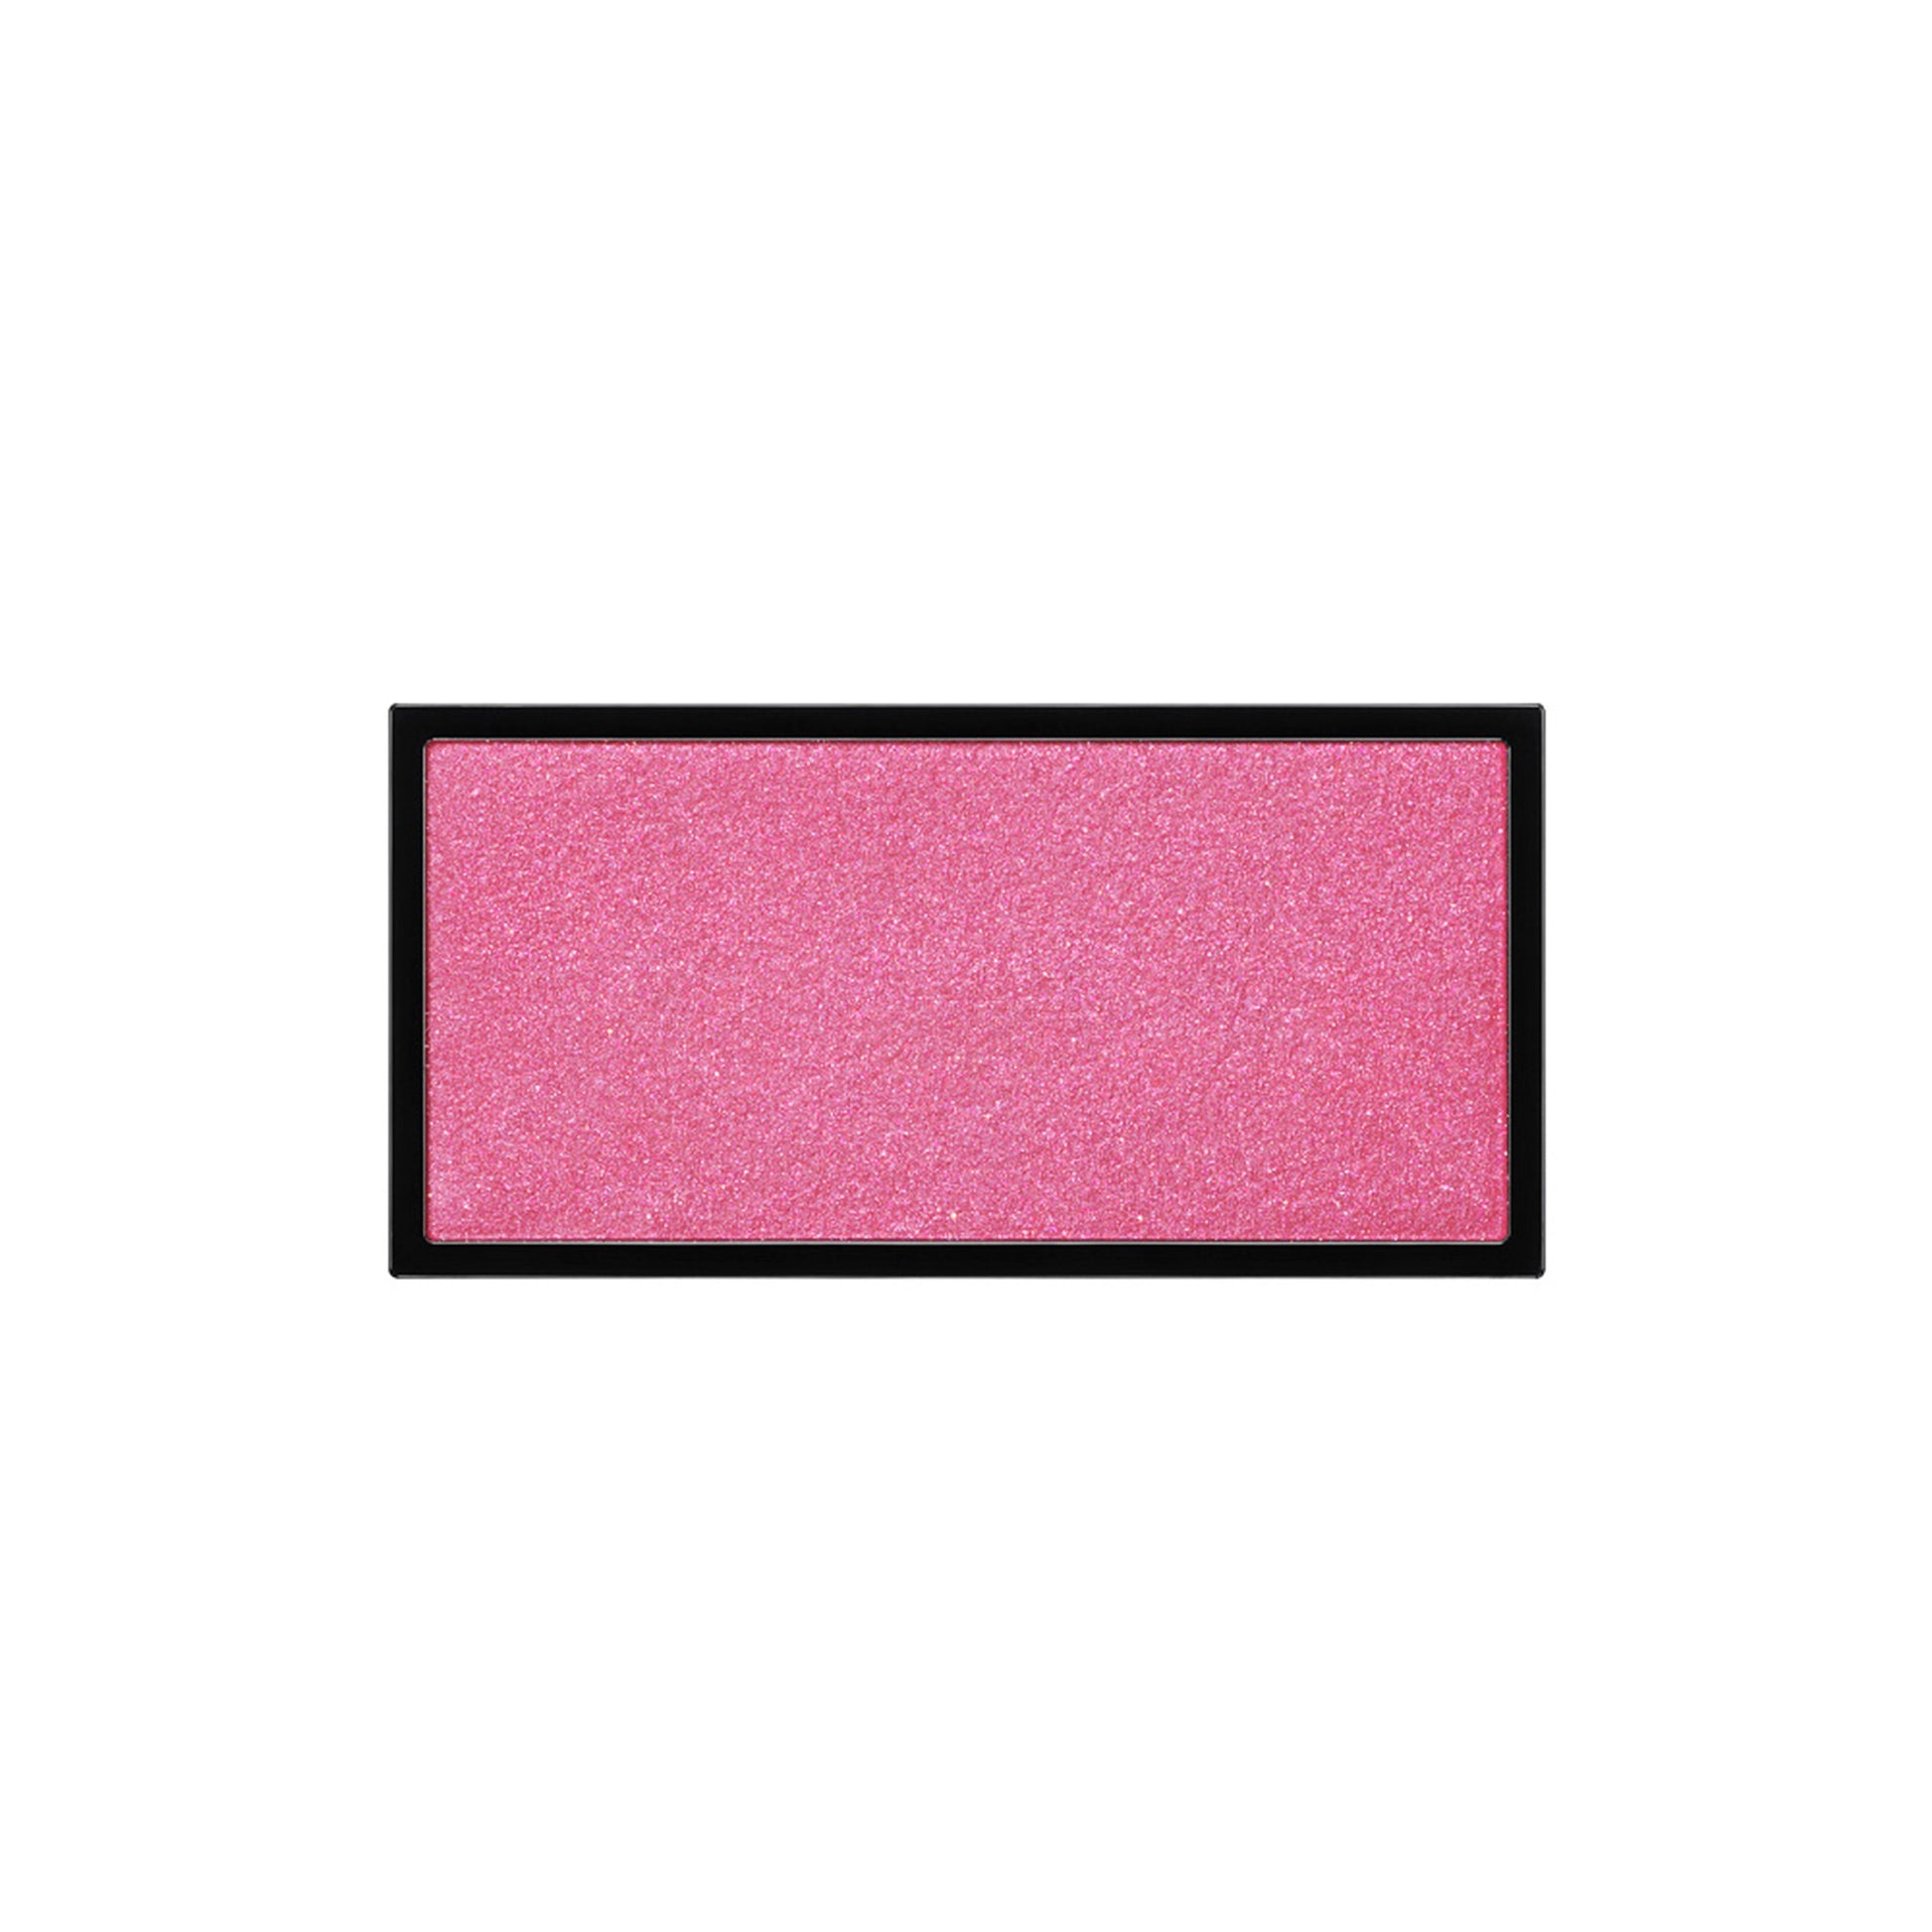 A rectangle shaped powder blush pan in a muted fuchsia